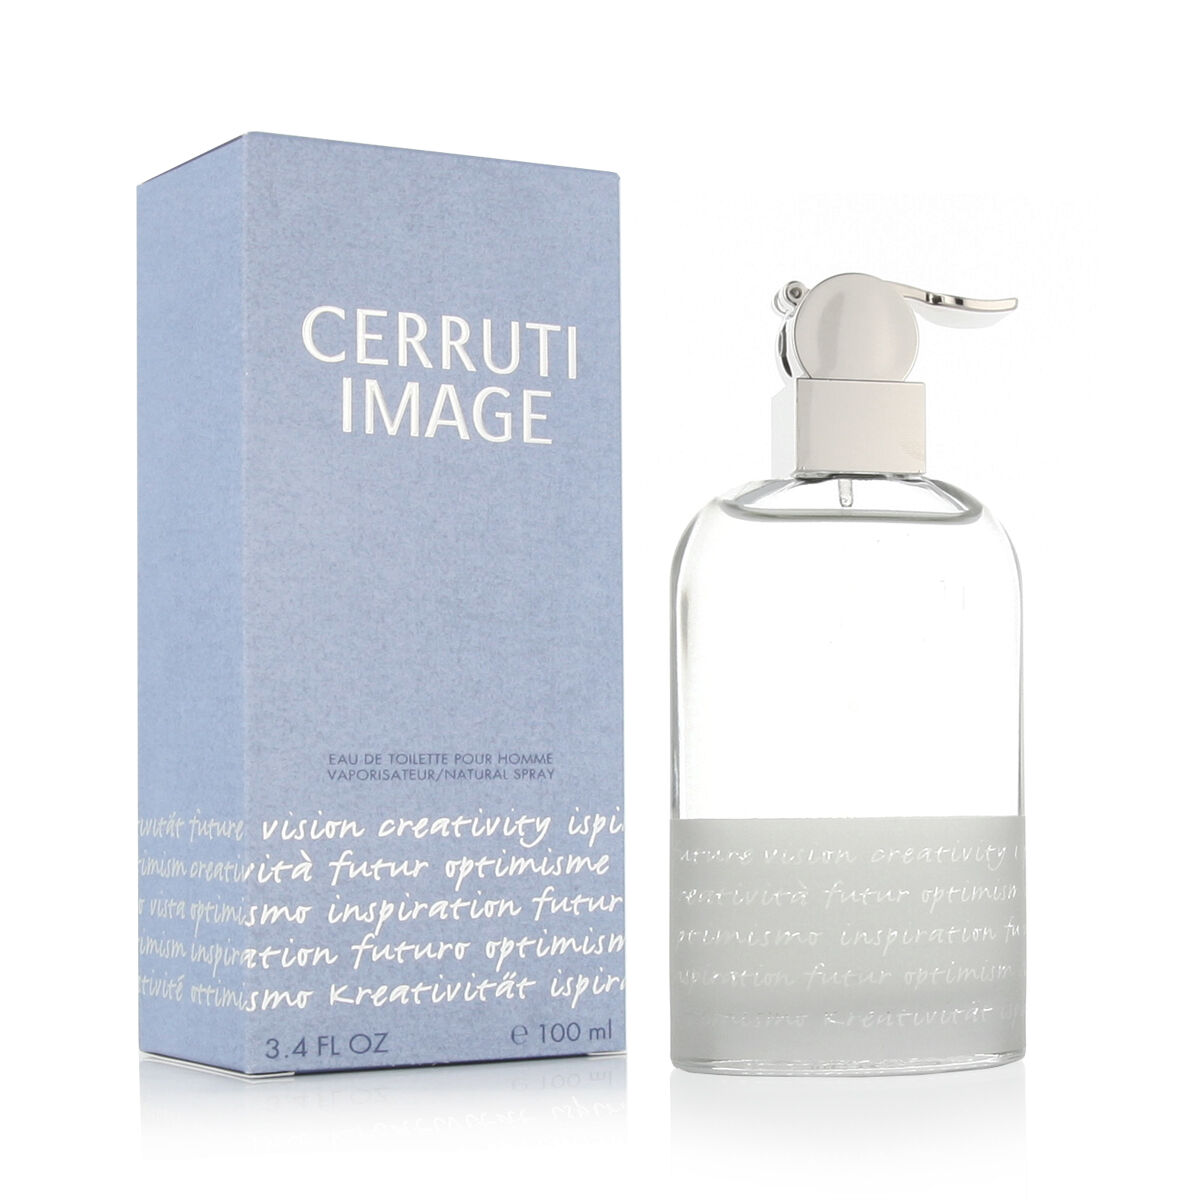 Parfum Homme Cerruti EDT Image (100 ml)